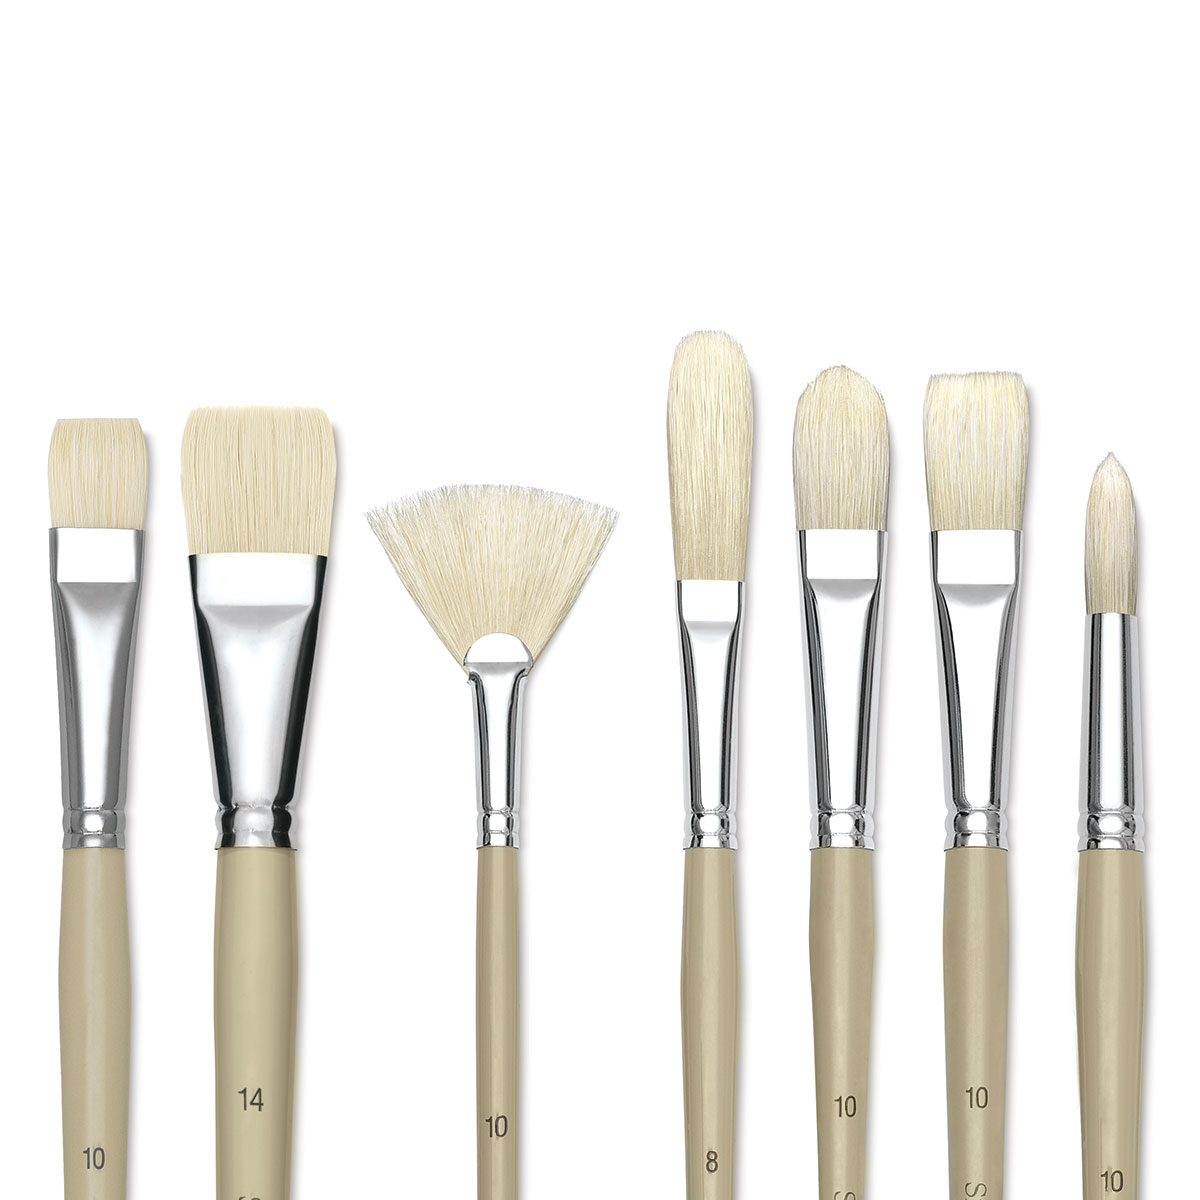 Robert Simmons Signet Bristle Brushes and Sets | BLICK Art Materials